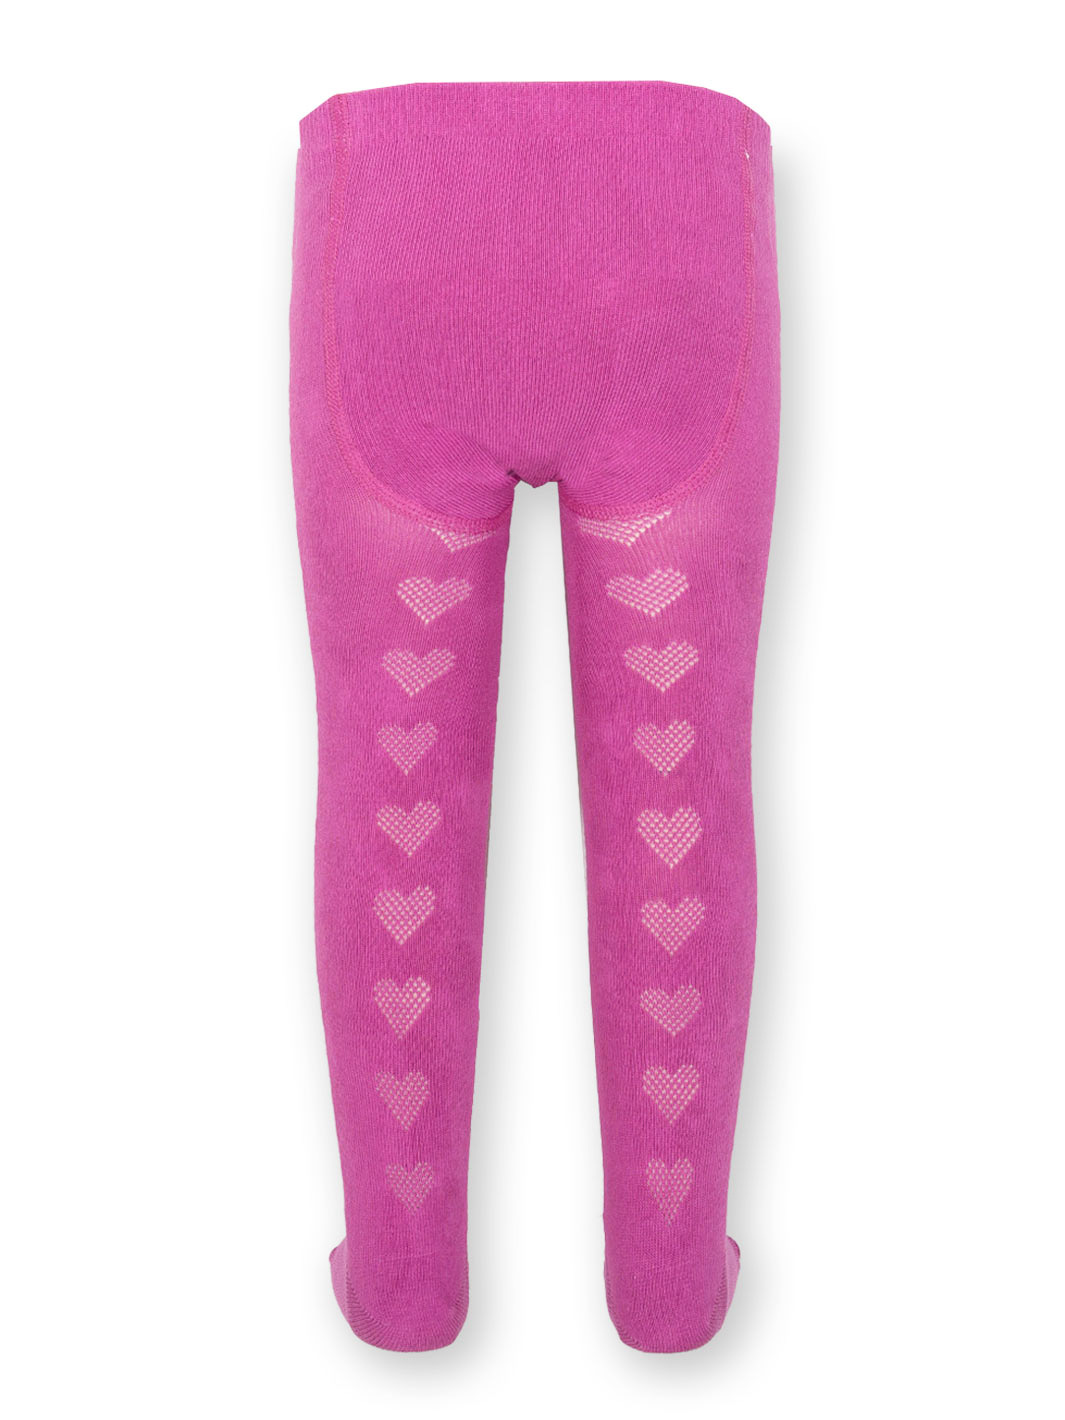 Strumpfhose Sweetheart pink von Kite Clothing